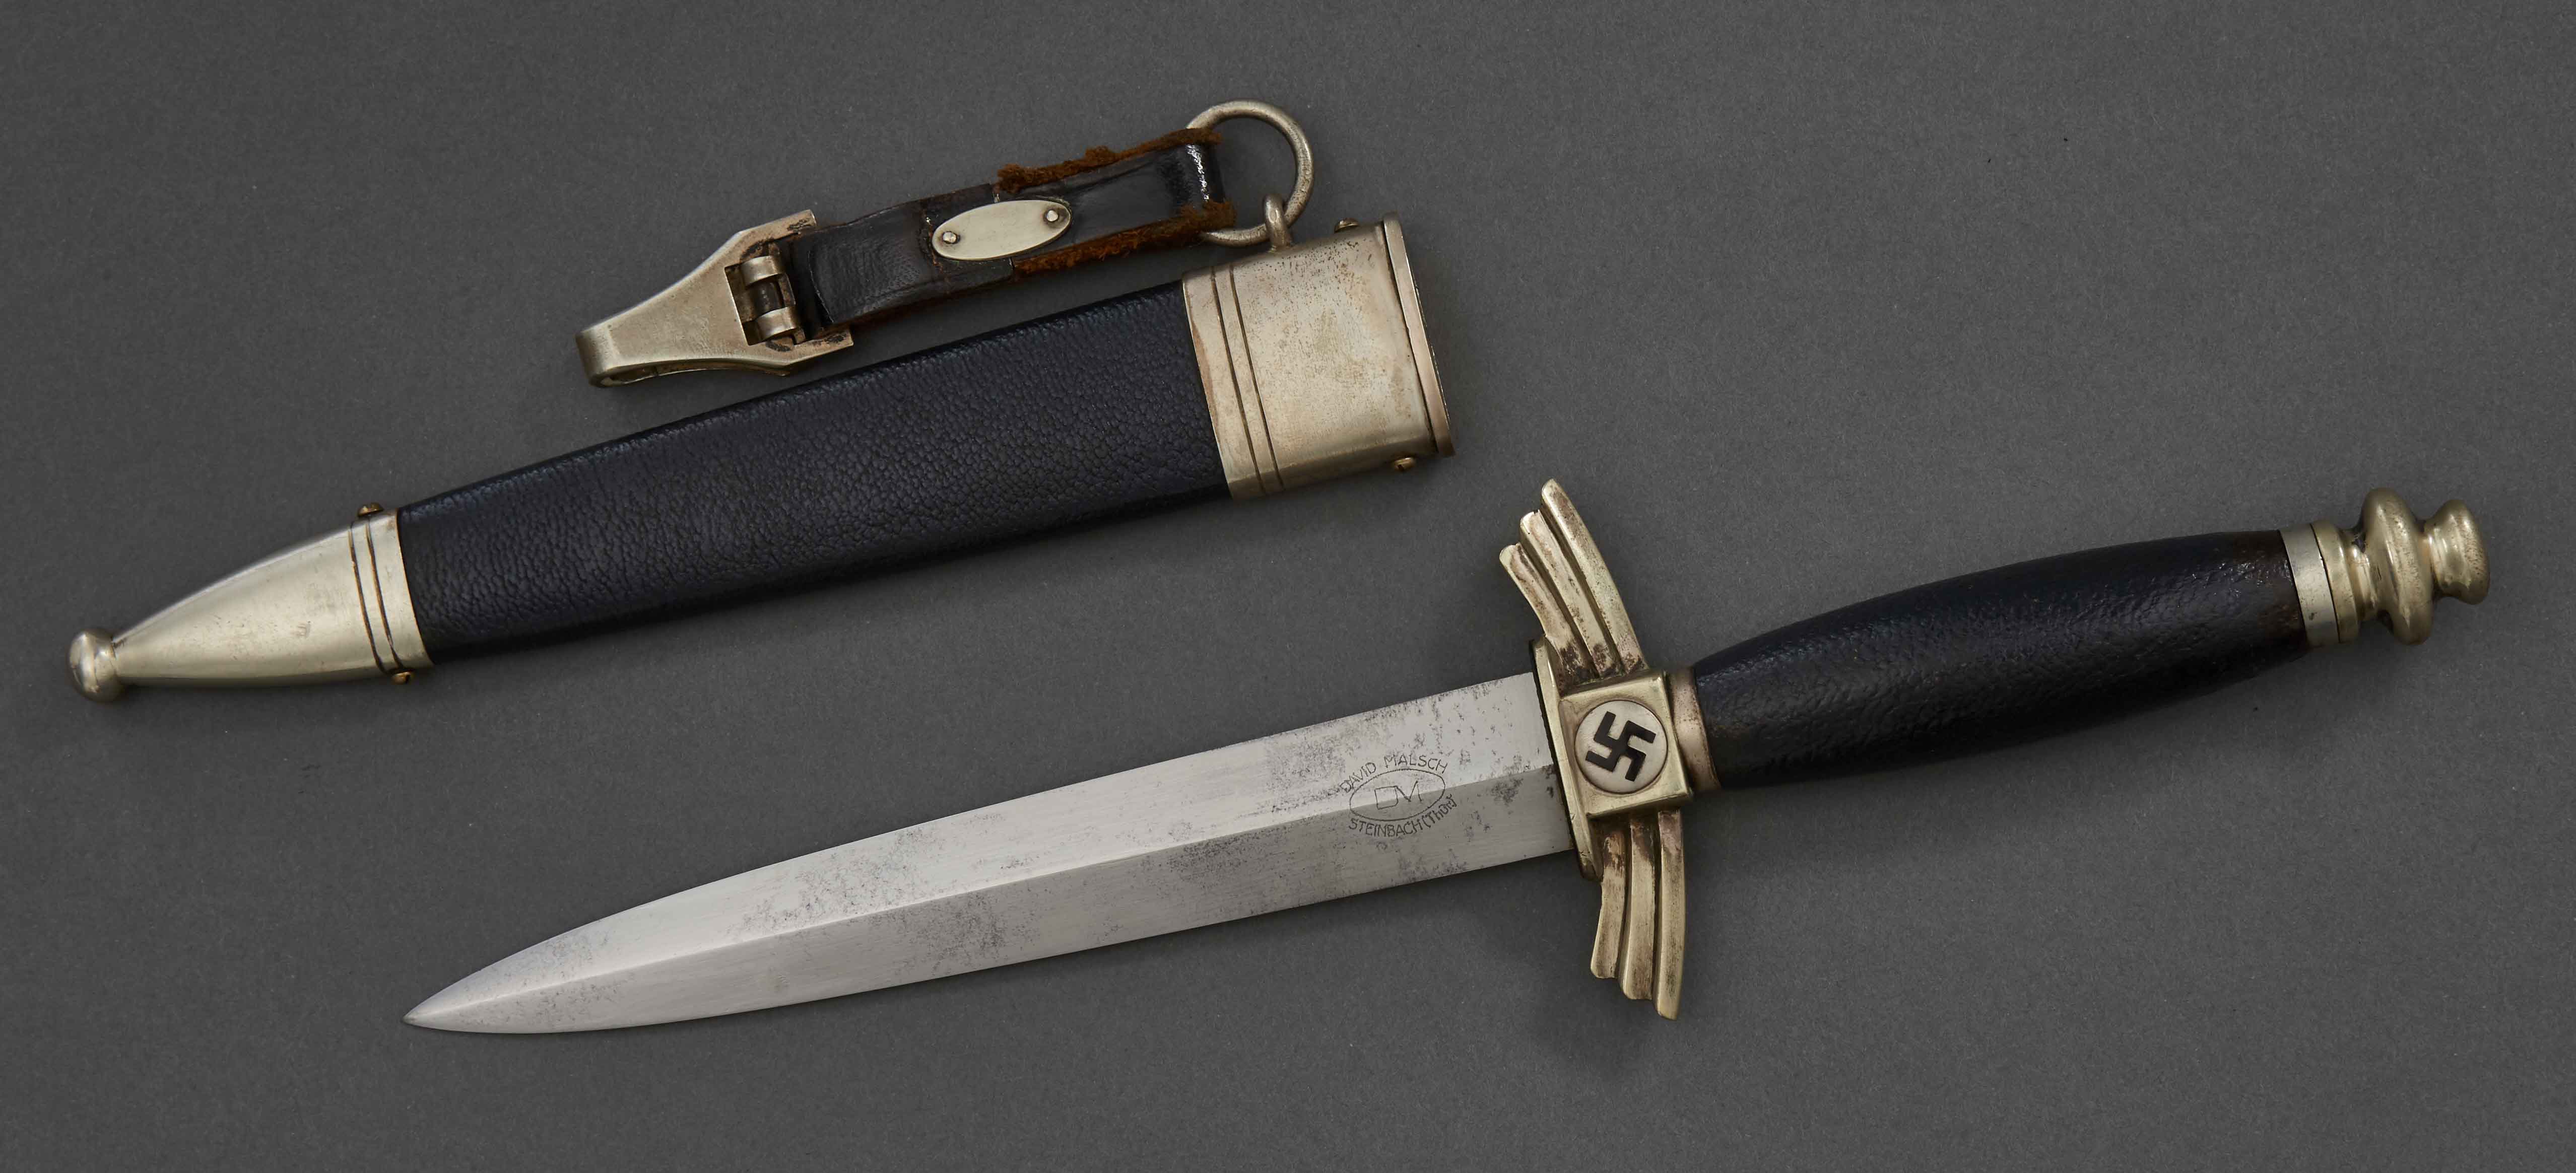 DLV service dagger (flyer’s knife)